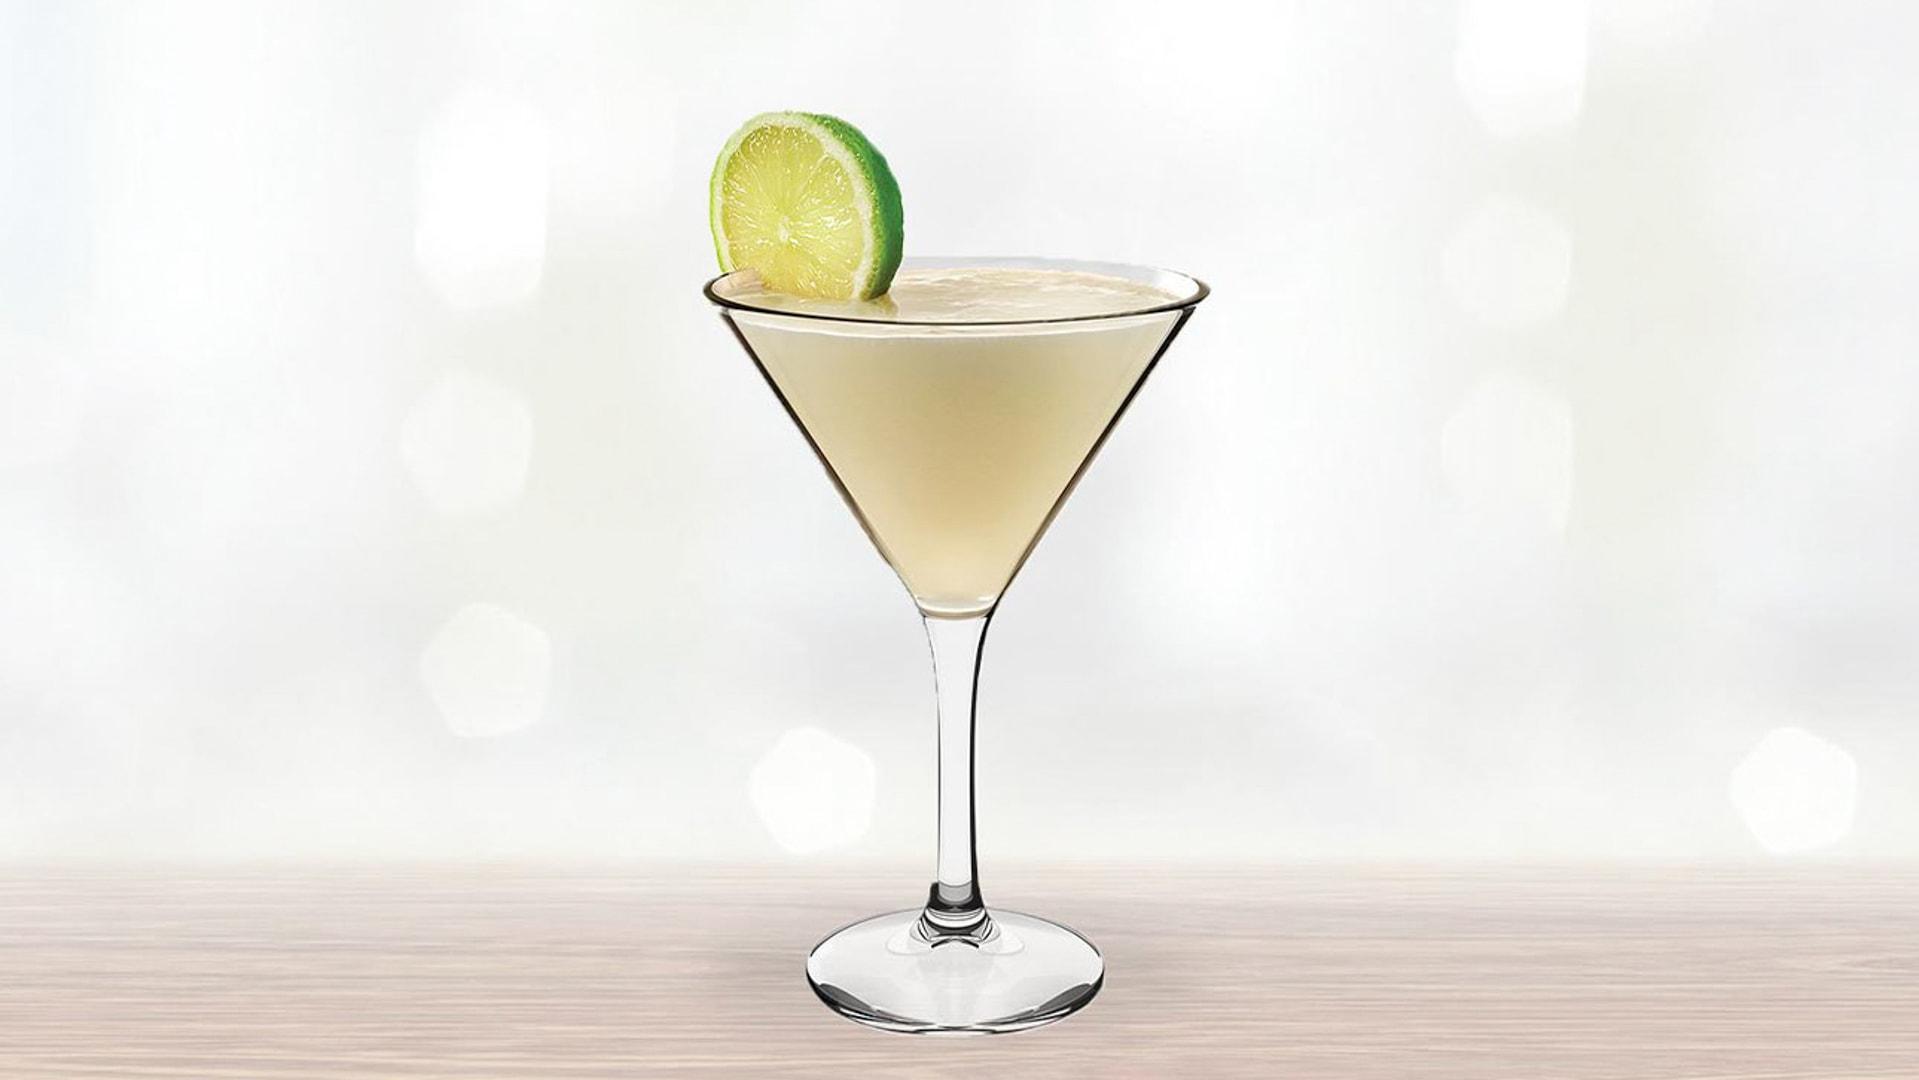 Pineapple Martini on plain background